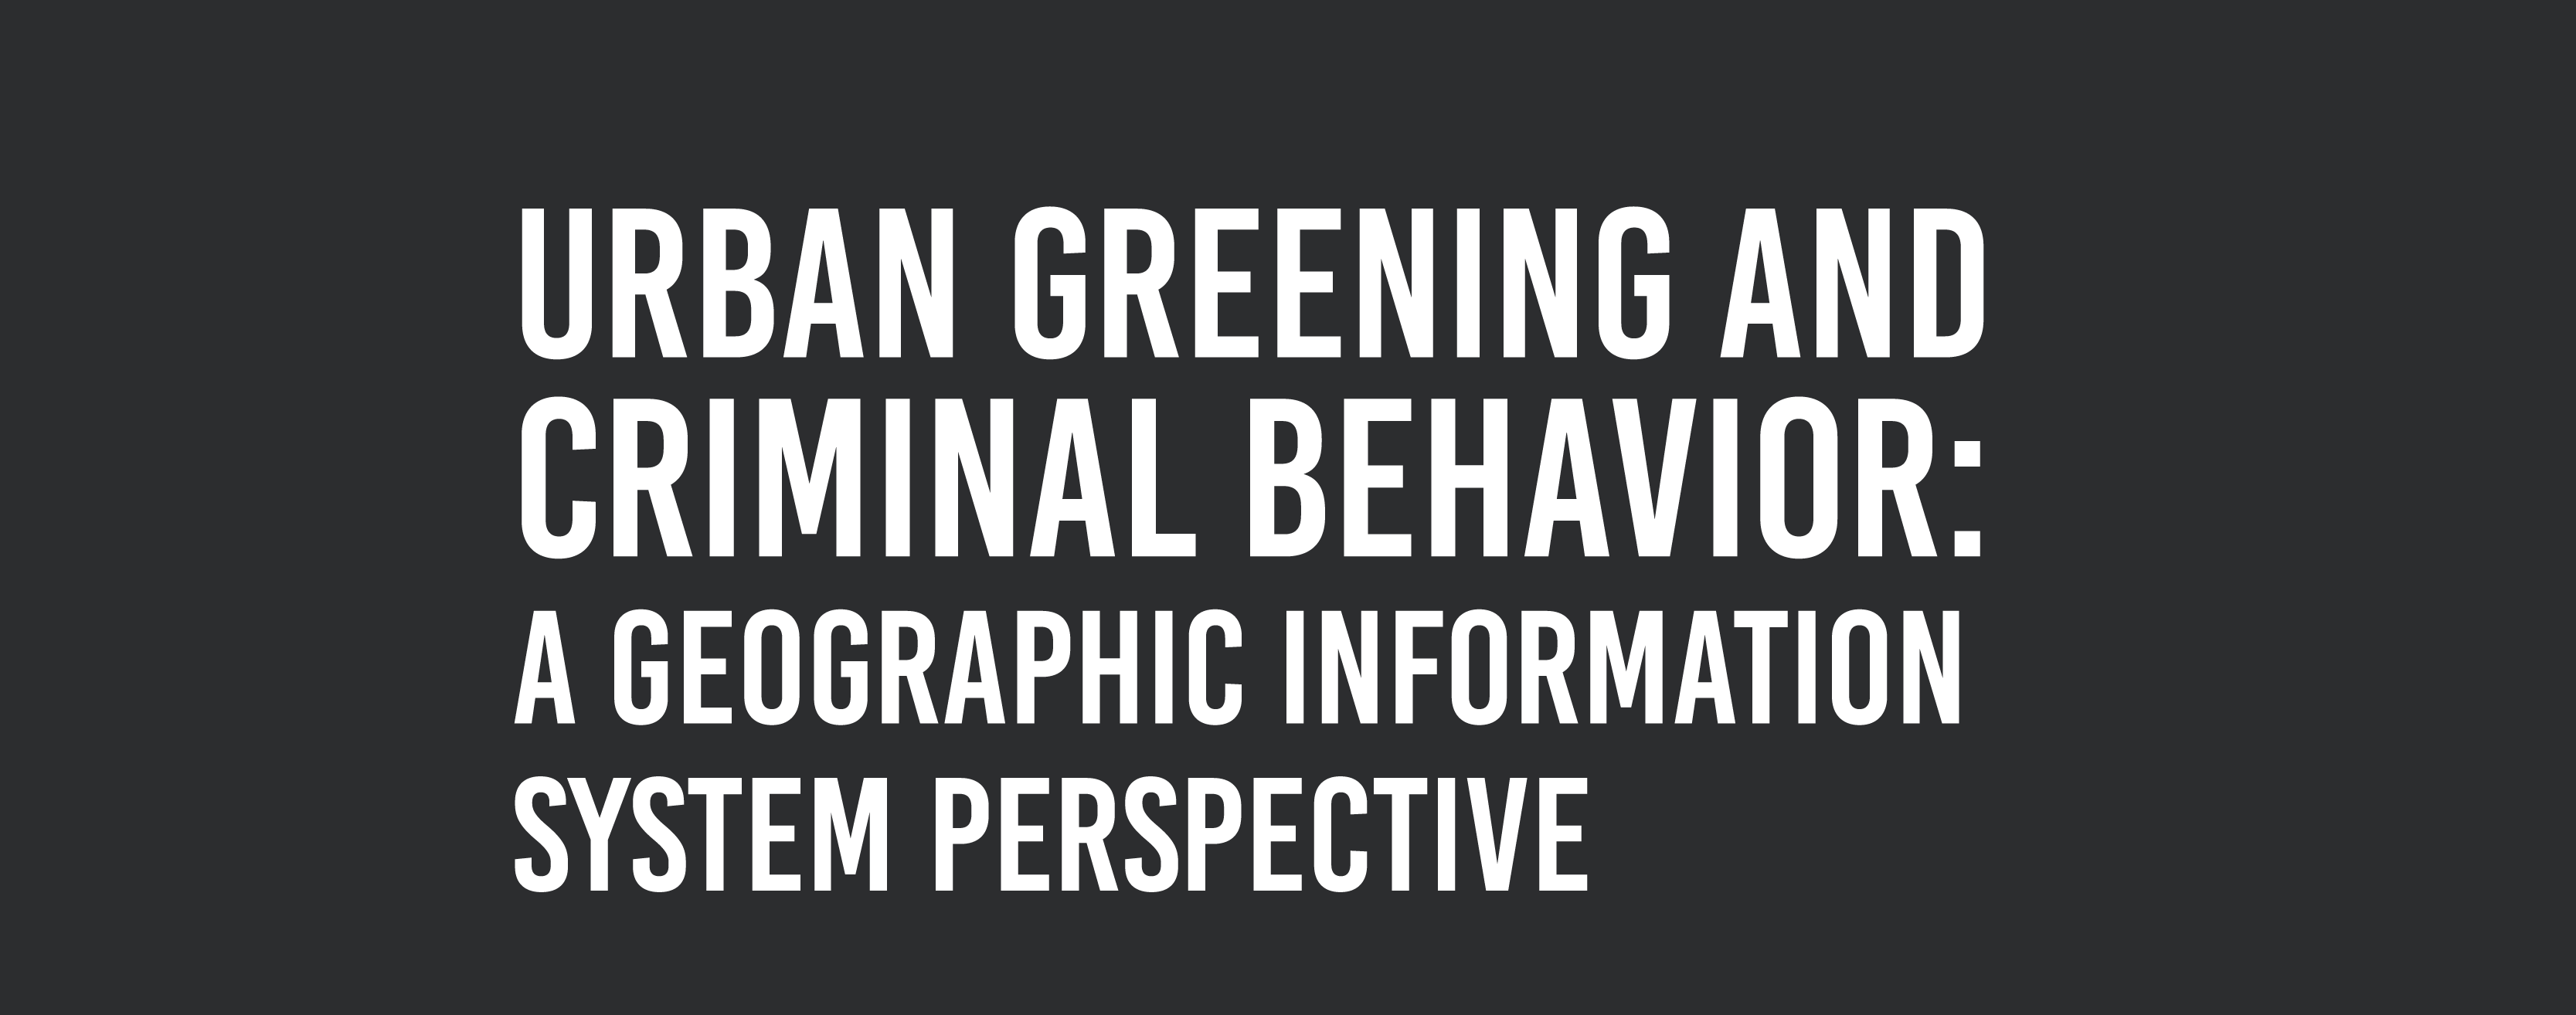 urban greening and criminal behavior